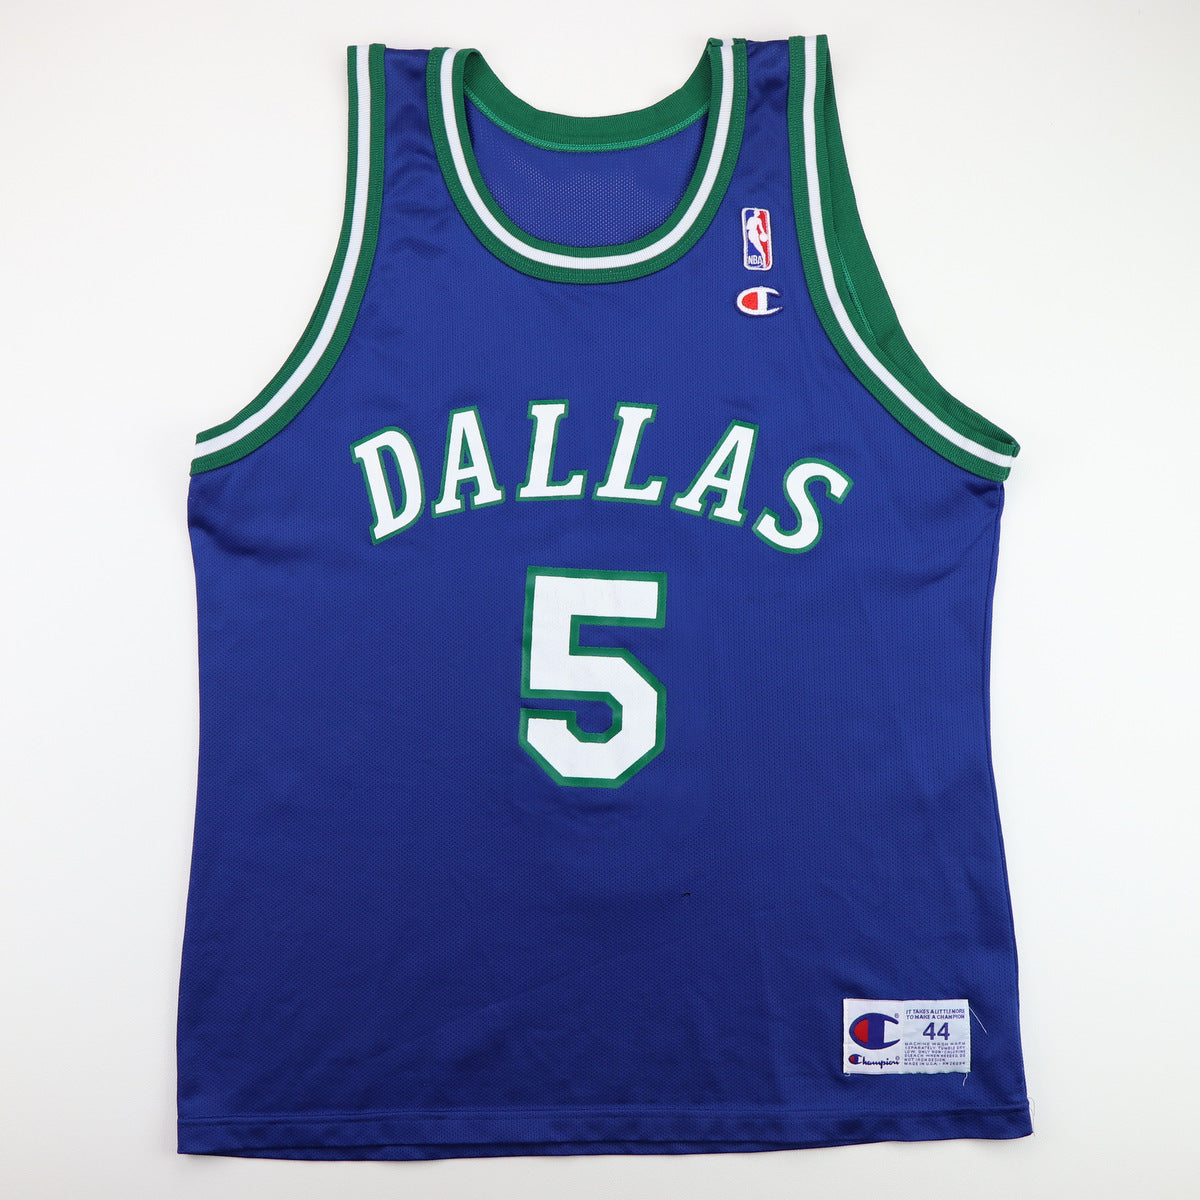 Jason Kidd Jersey Large Adidas Dallas Mavericks #2 NBA Vintage